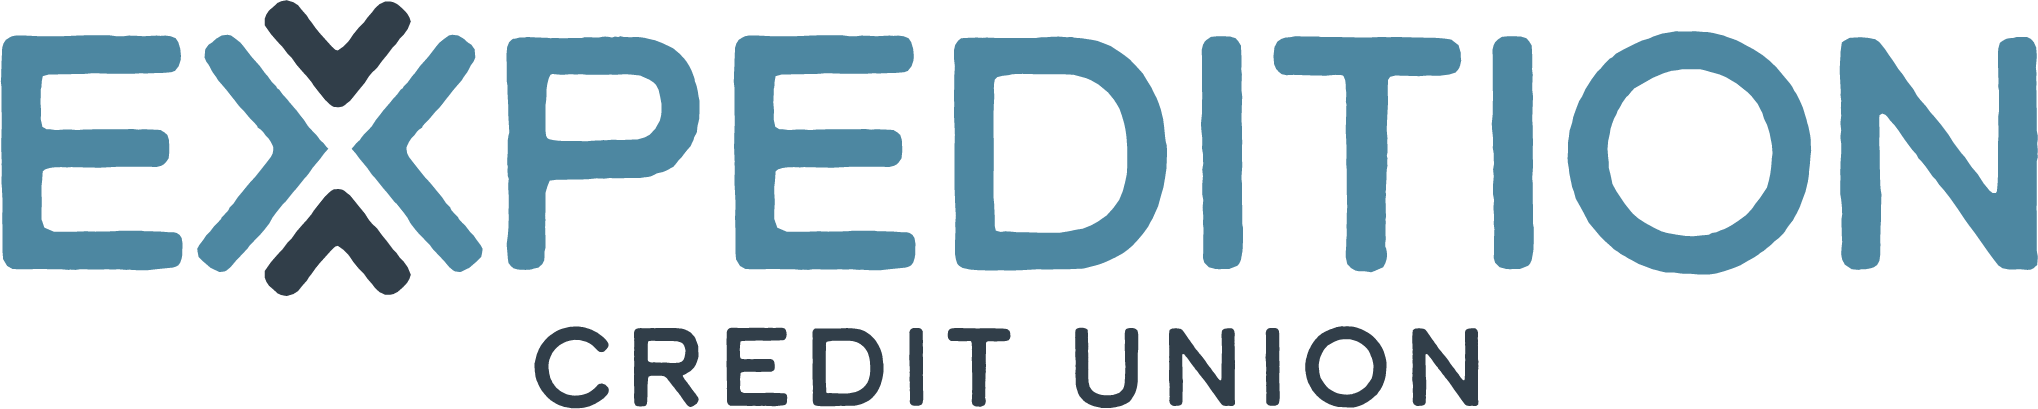 Expedition Credit Union logo